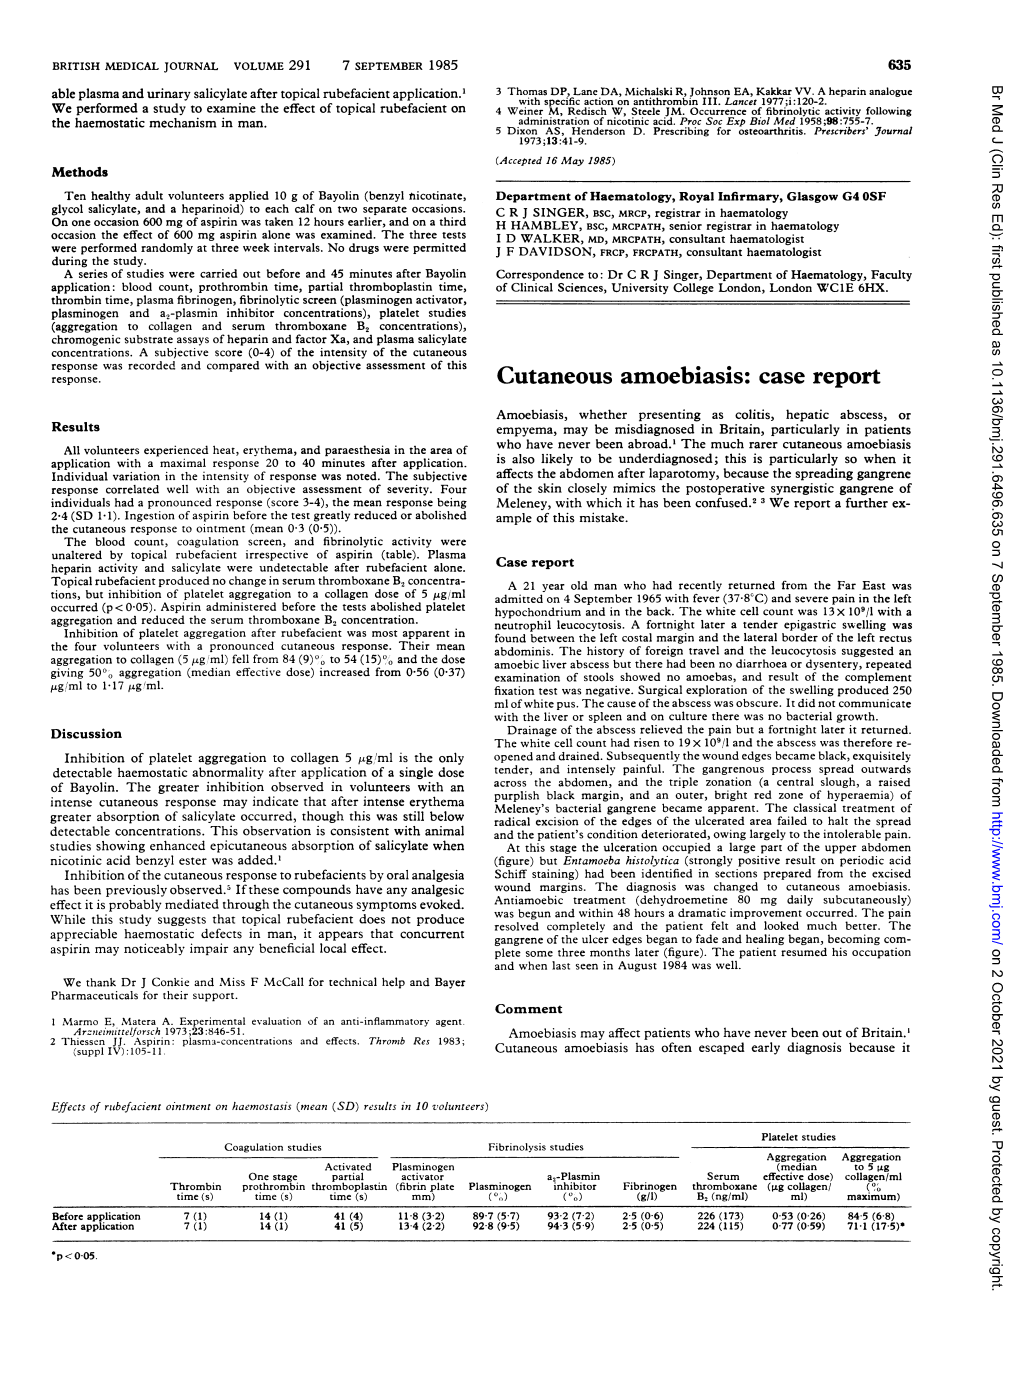 Cutaneous Amoebiasis: Case Report